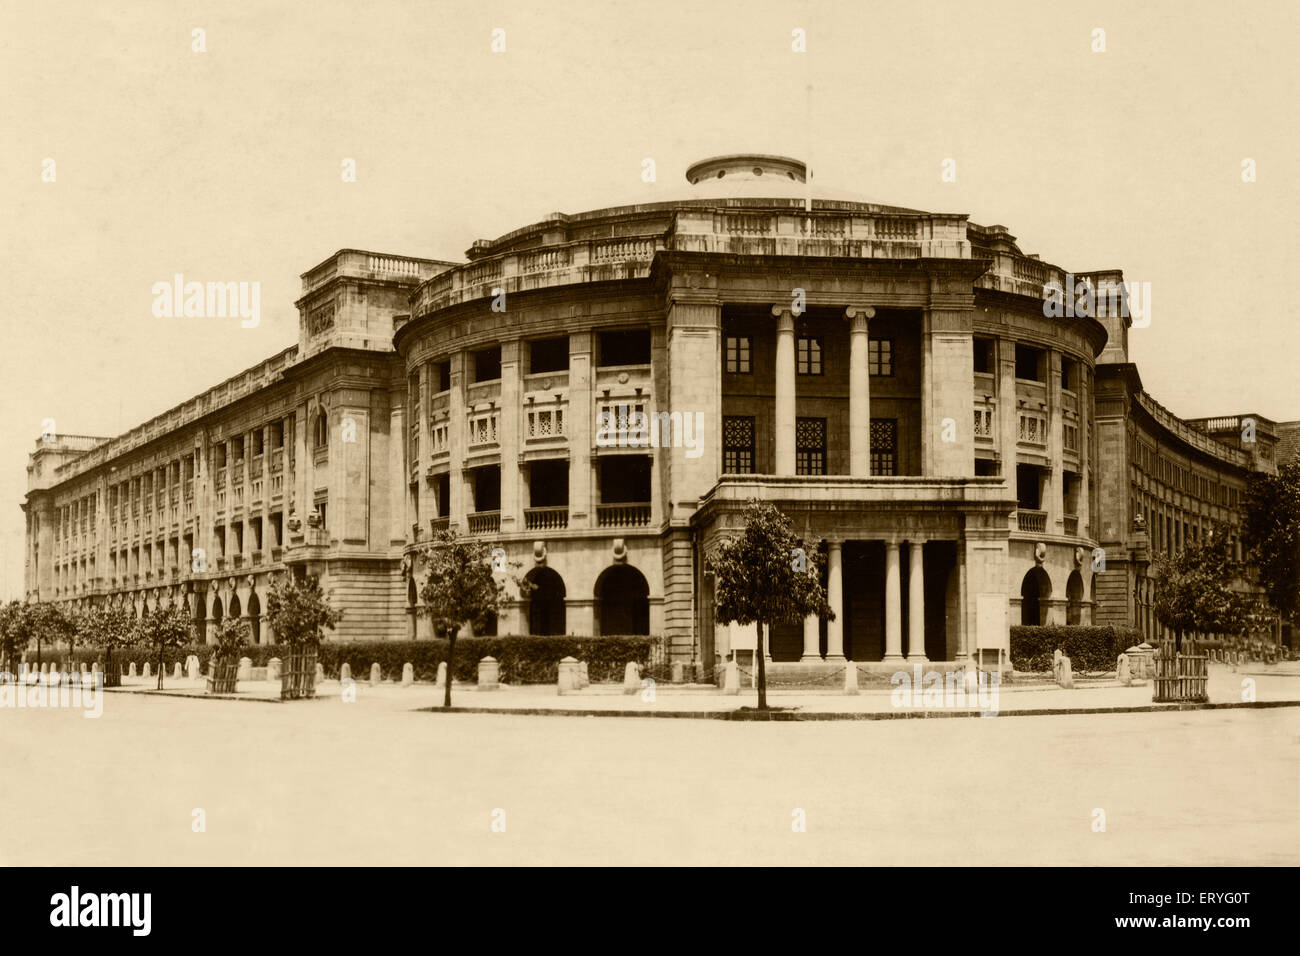 Cowasji Jehangir Hall jetzt NGMA, CJ Hall, Alter Jahrgang 1900s Bild, Bombay, Mumbai, Maharashtra, Indien, Asien Stockfoto